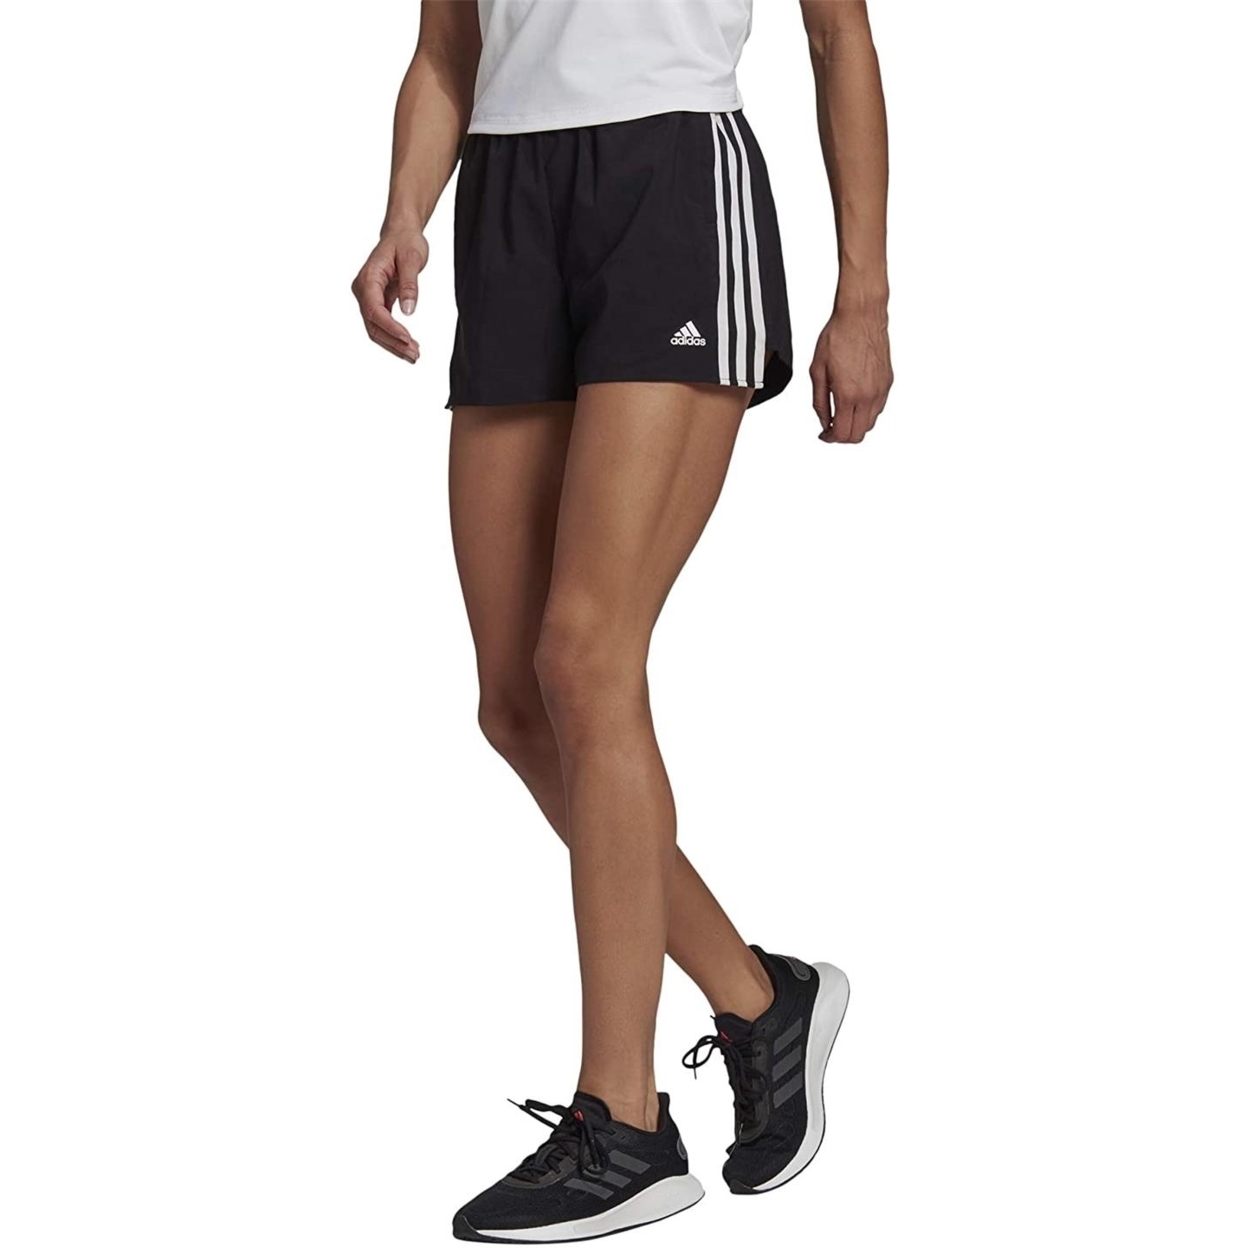 Adidas womens,3-Stripes Woven Shorts,Black/White,Large